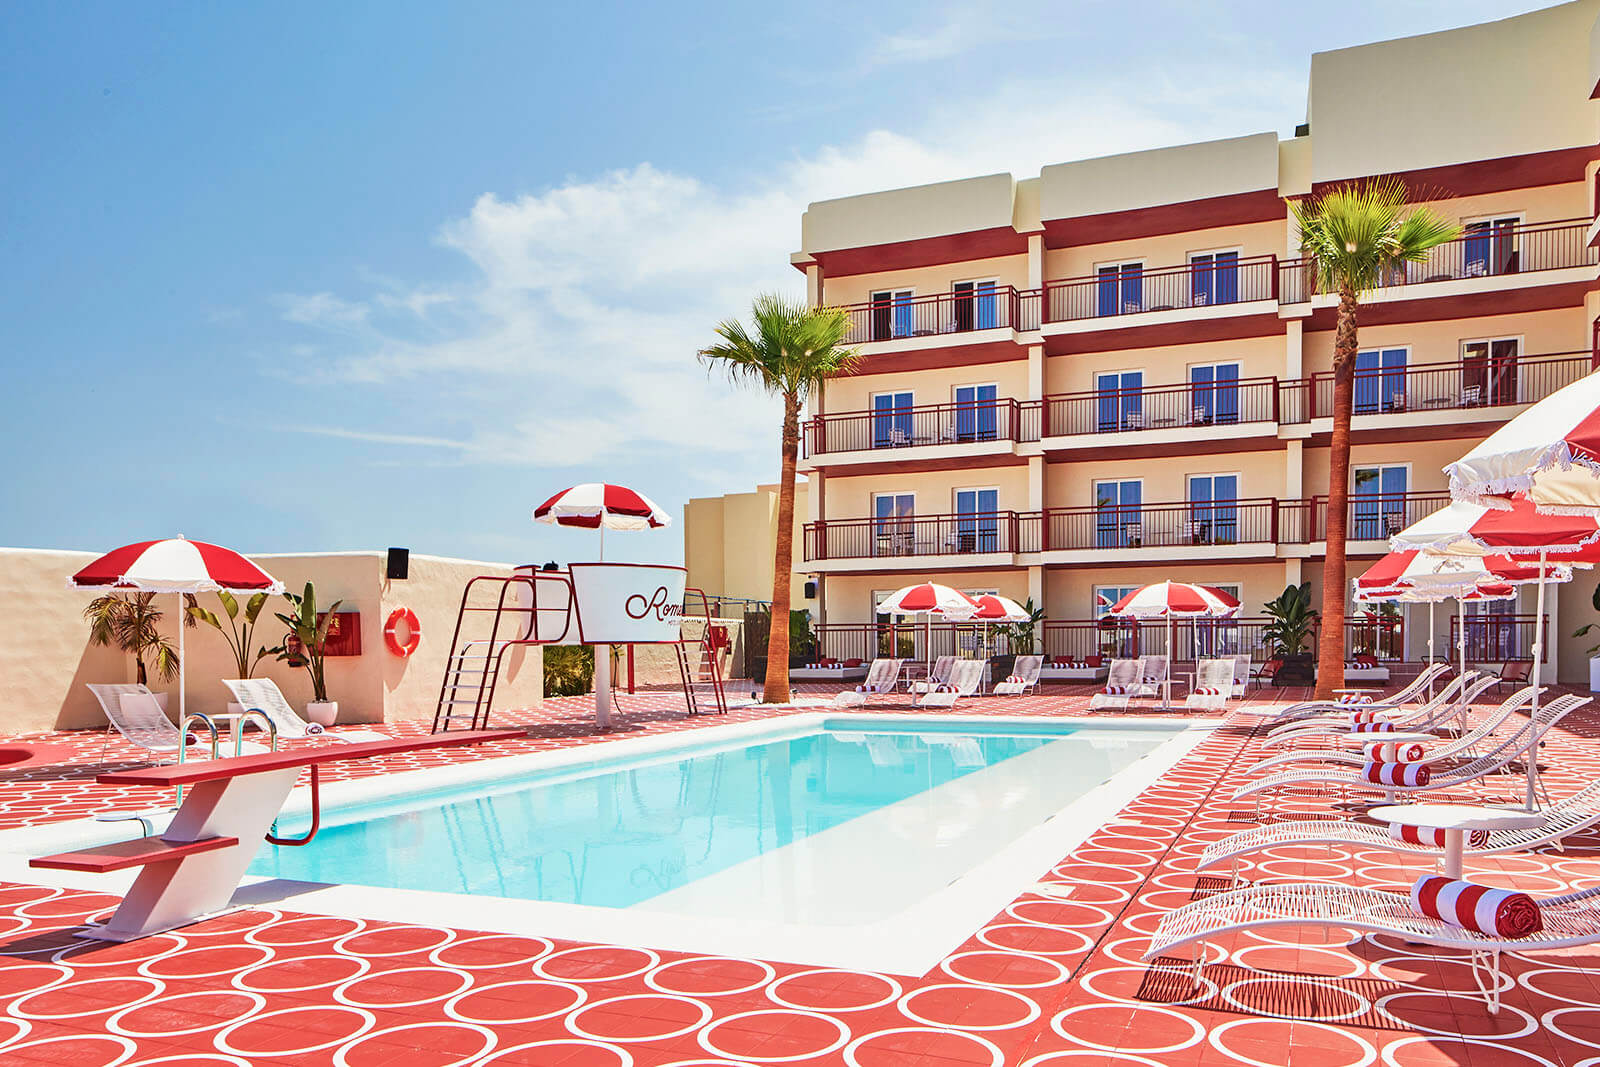 Romeo's Motel and Diner - Formentera Break